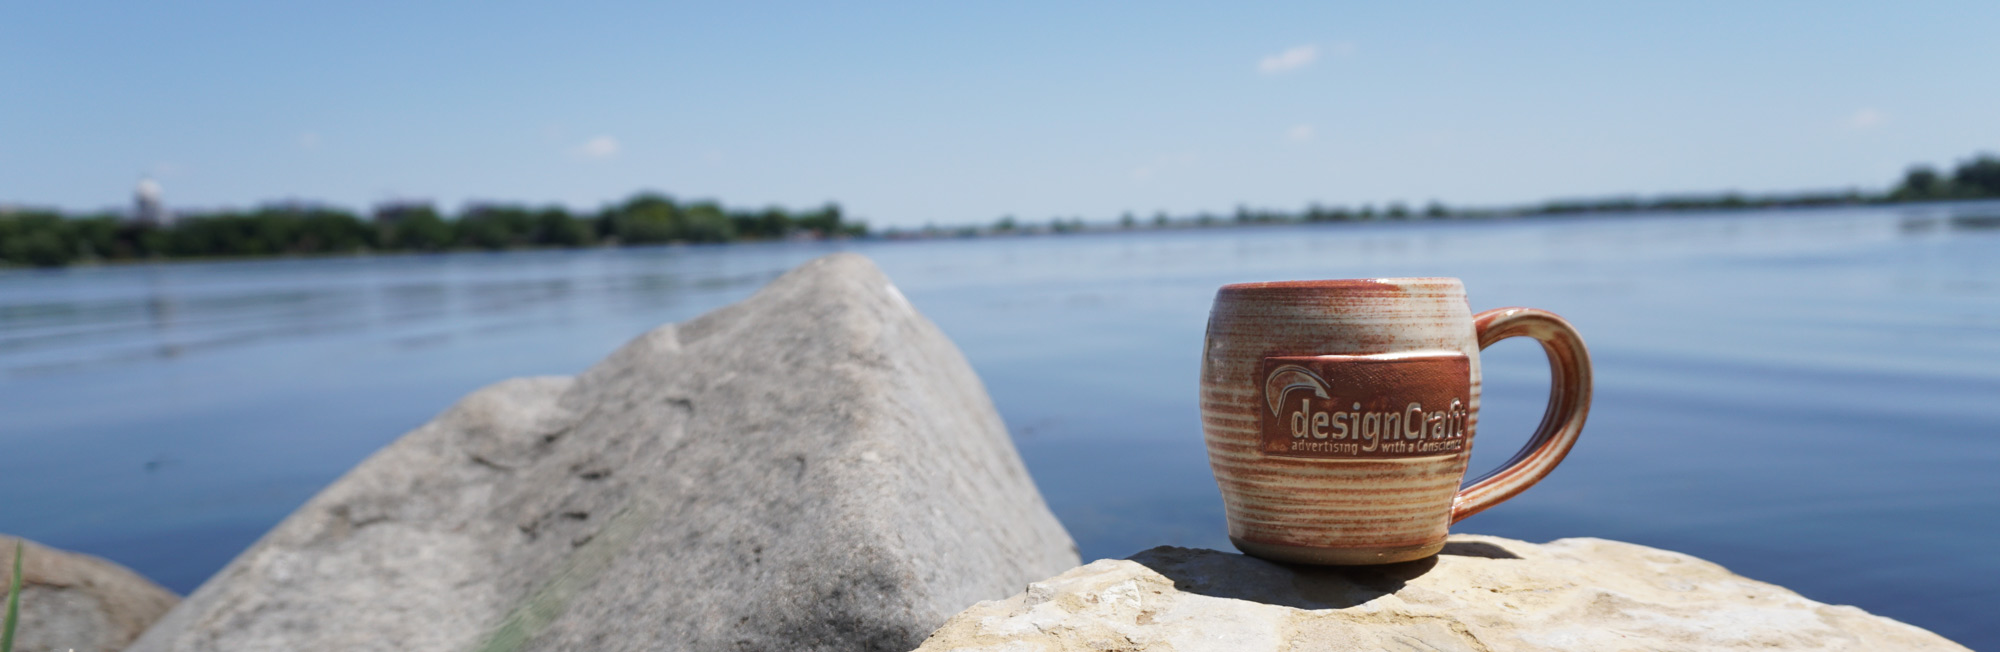 Handmade pottery mug with designCraft logo on it sitting on rock by lake